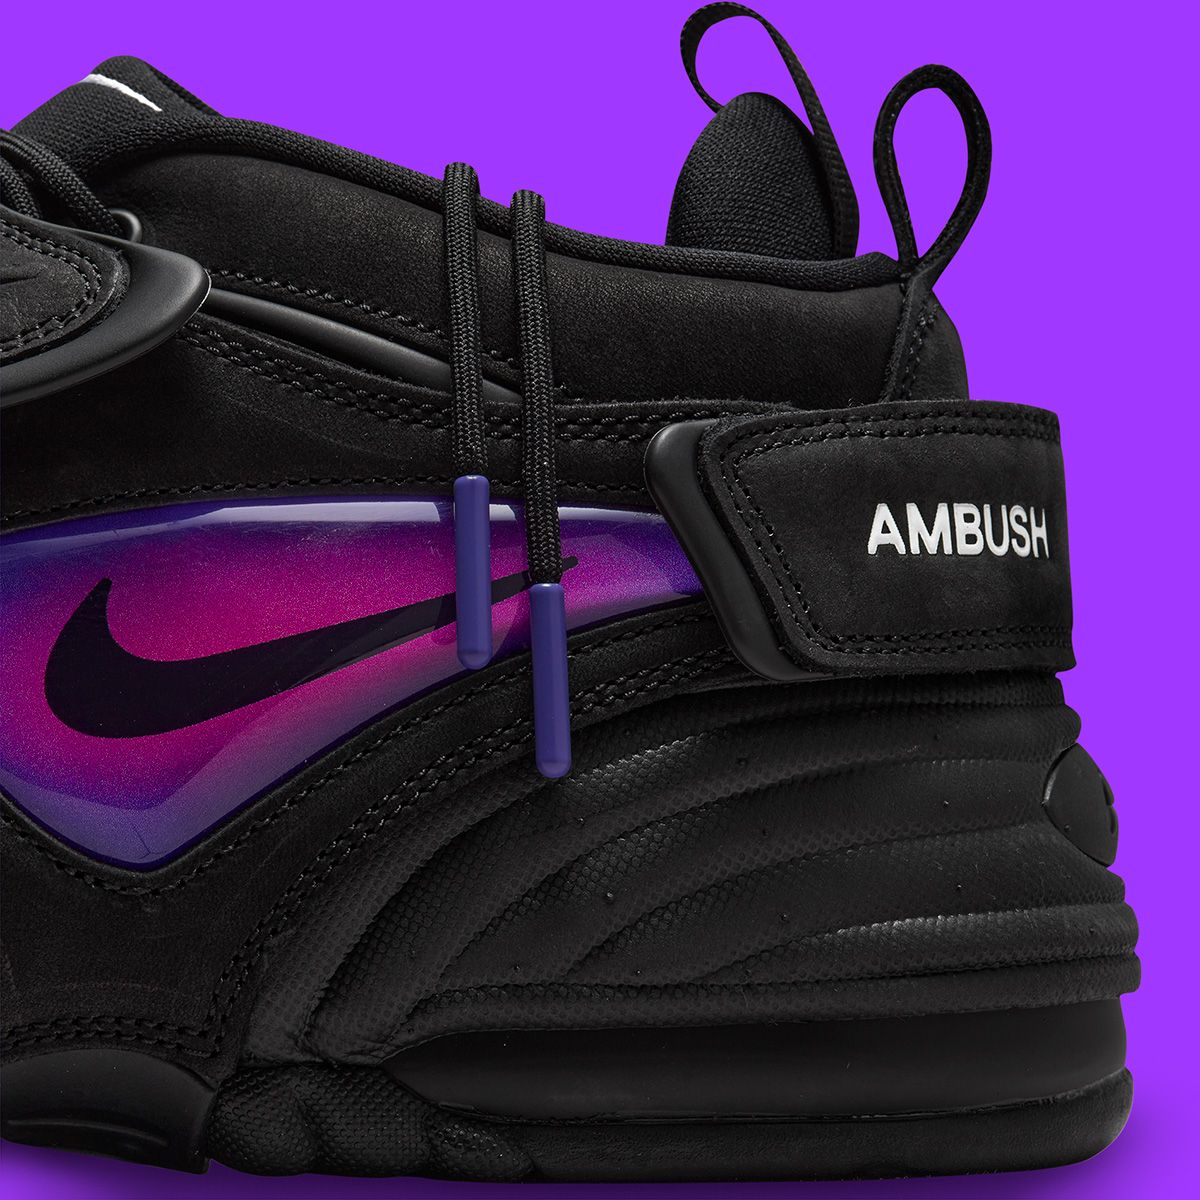 AMBUSH x Nike Air Adjust Force White/Black On-Foot Look